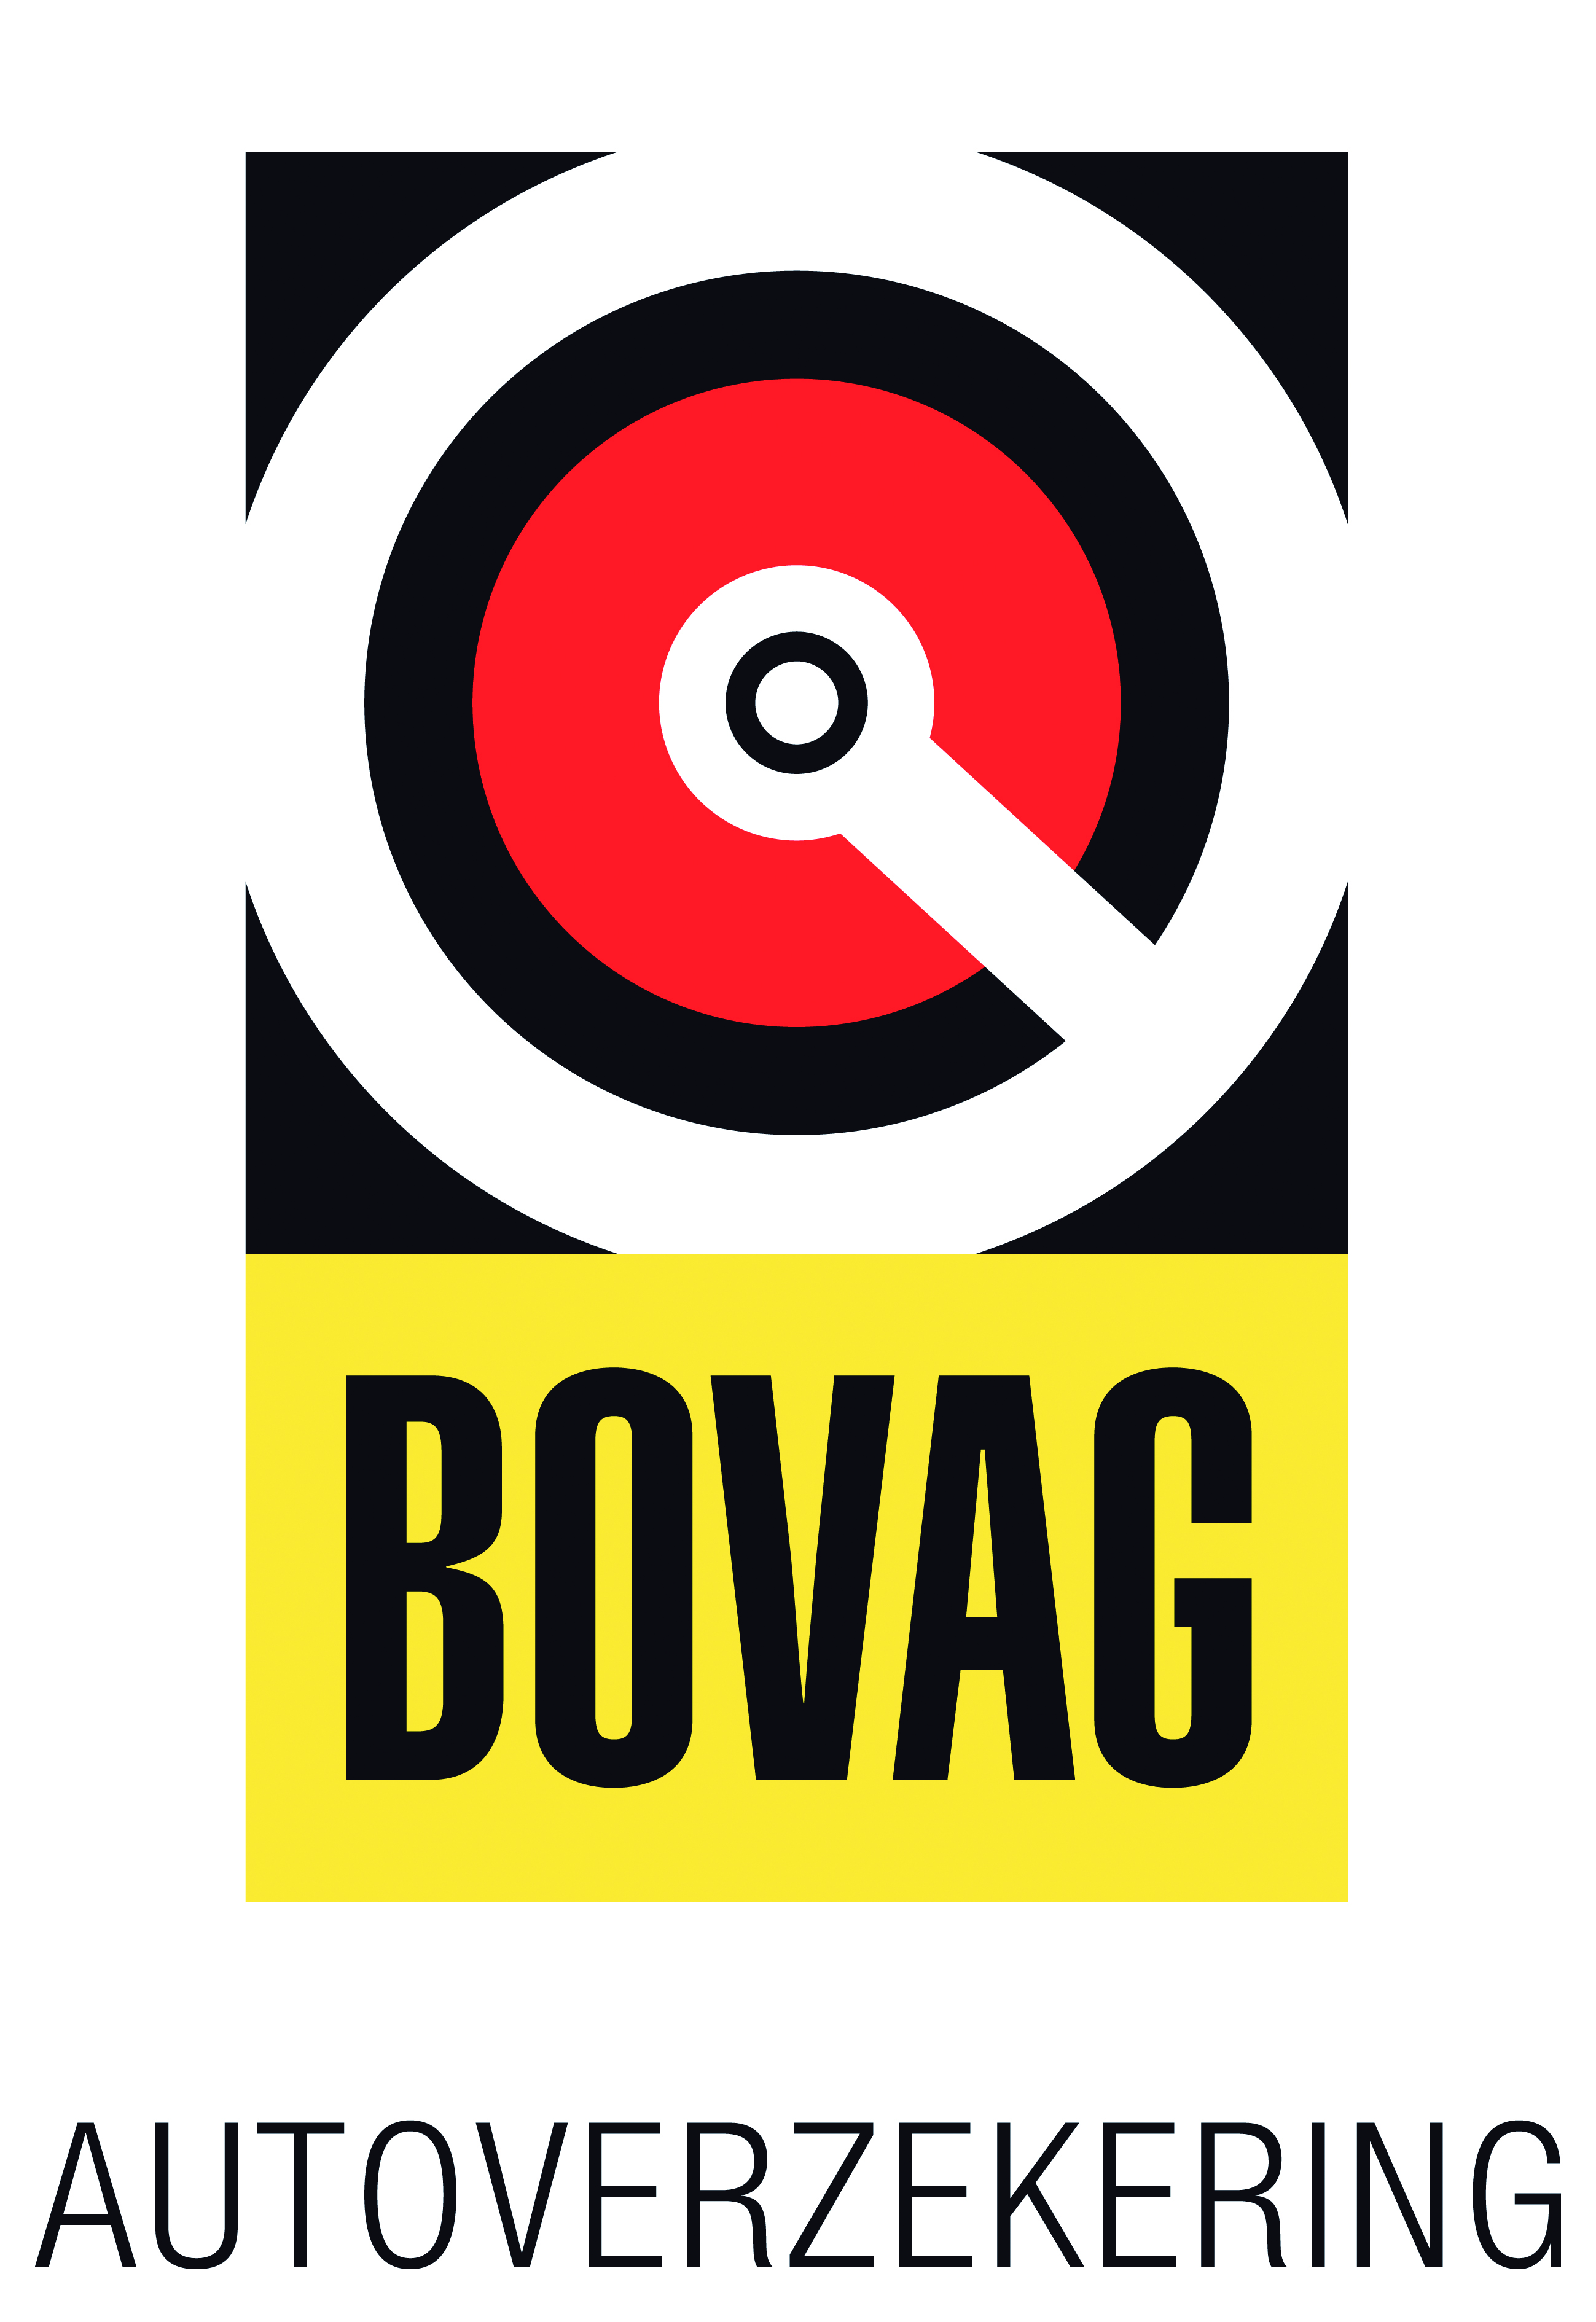 BOVAG_Autoverzekering_logo.jpg